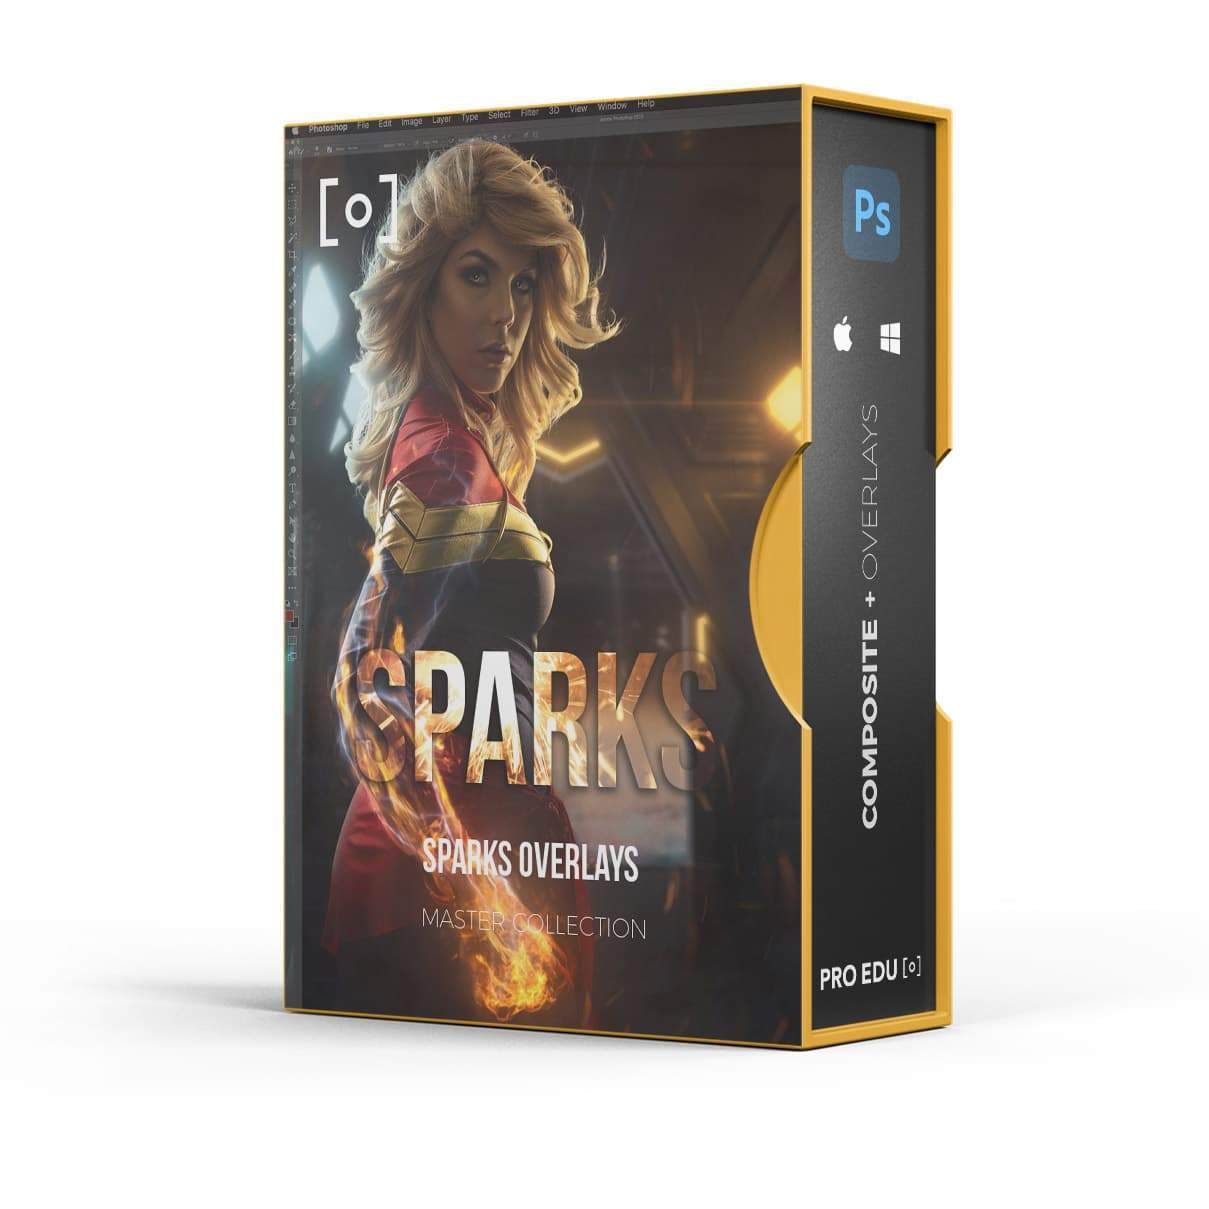 Sparks FX Volume 1 + 2 - Photoshop Overlays Assets - PRO EDU PRO EDU PRO EDU